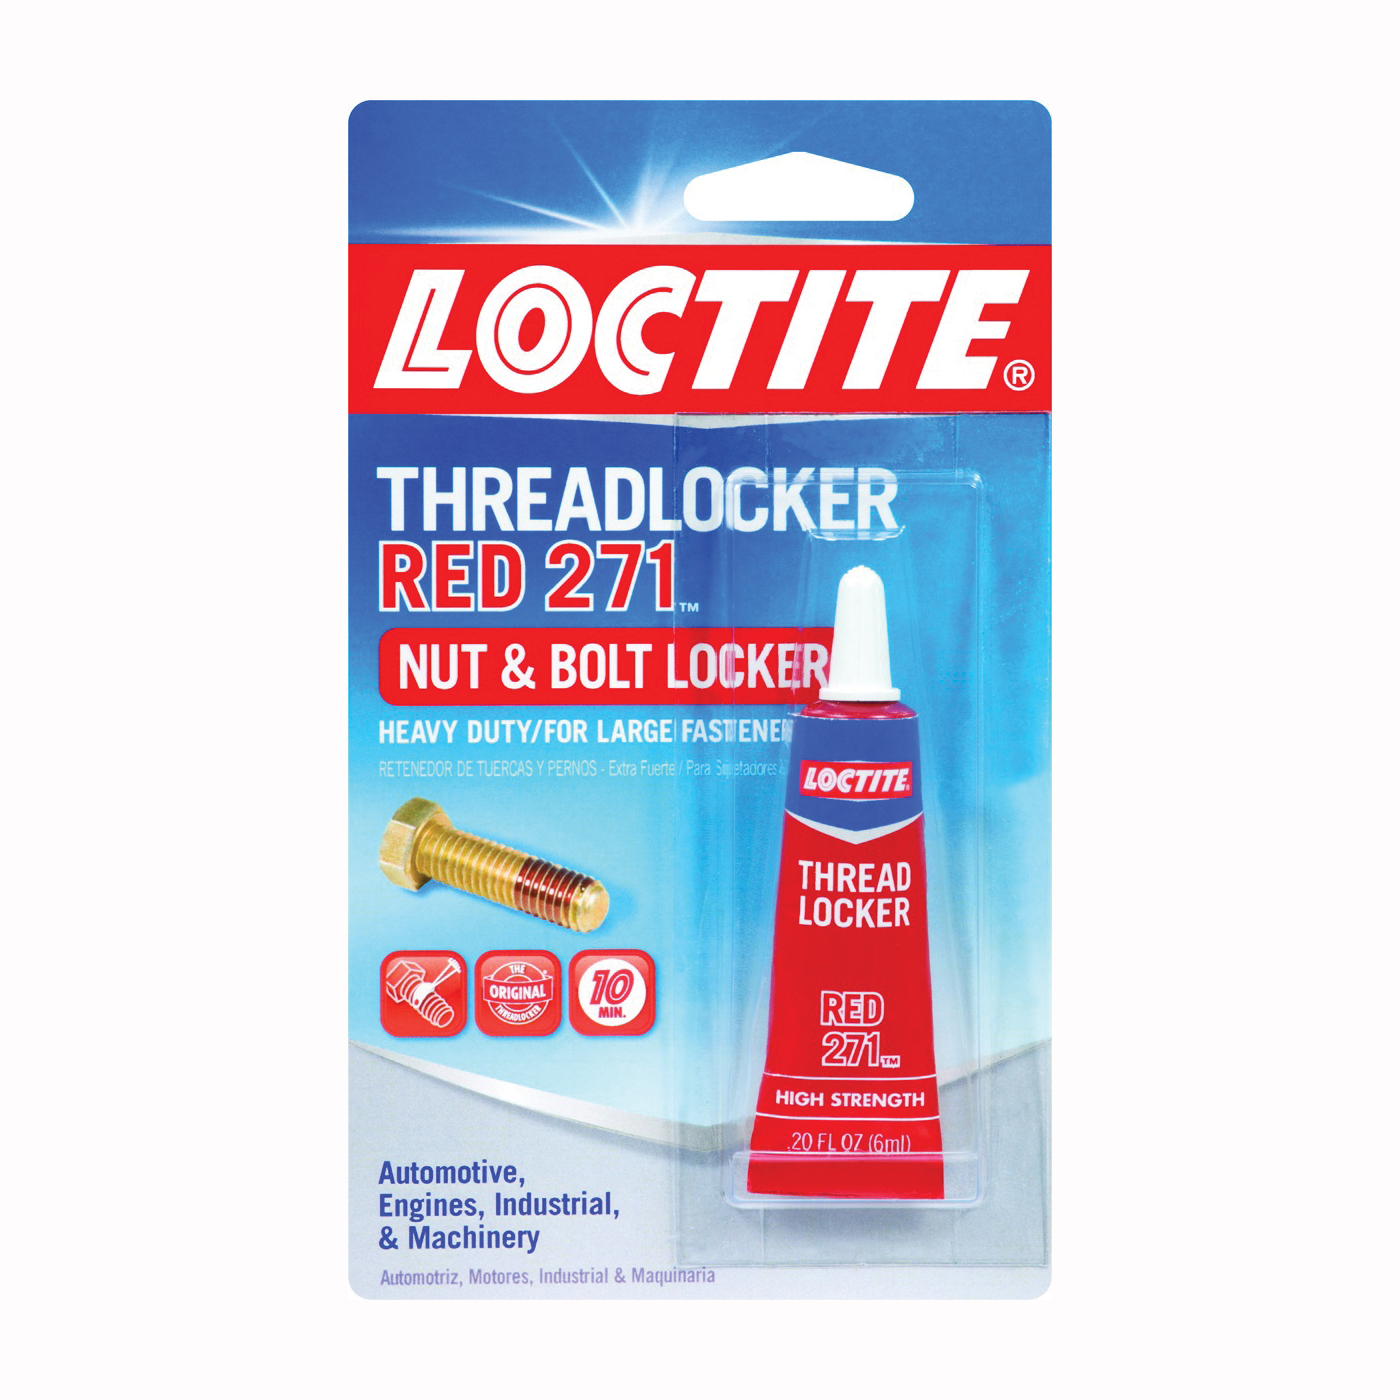 Loctite Extend Rust Neutralizer | Bee Clean Marine